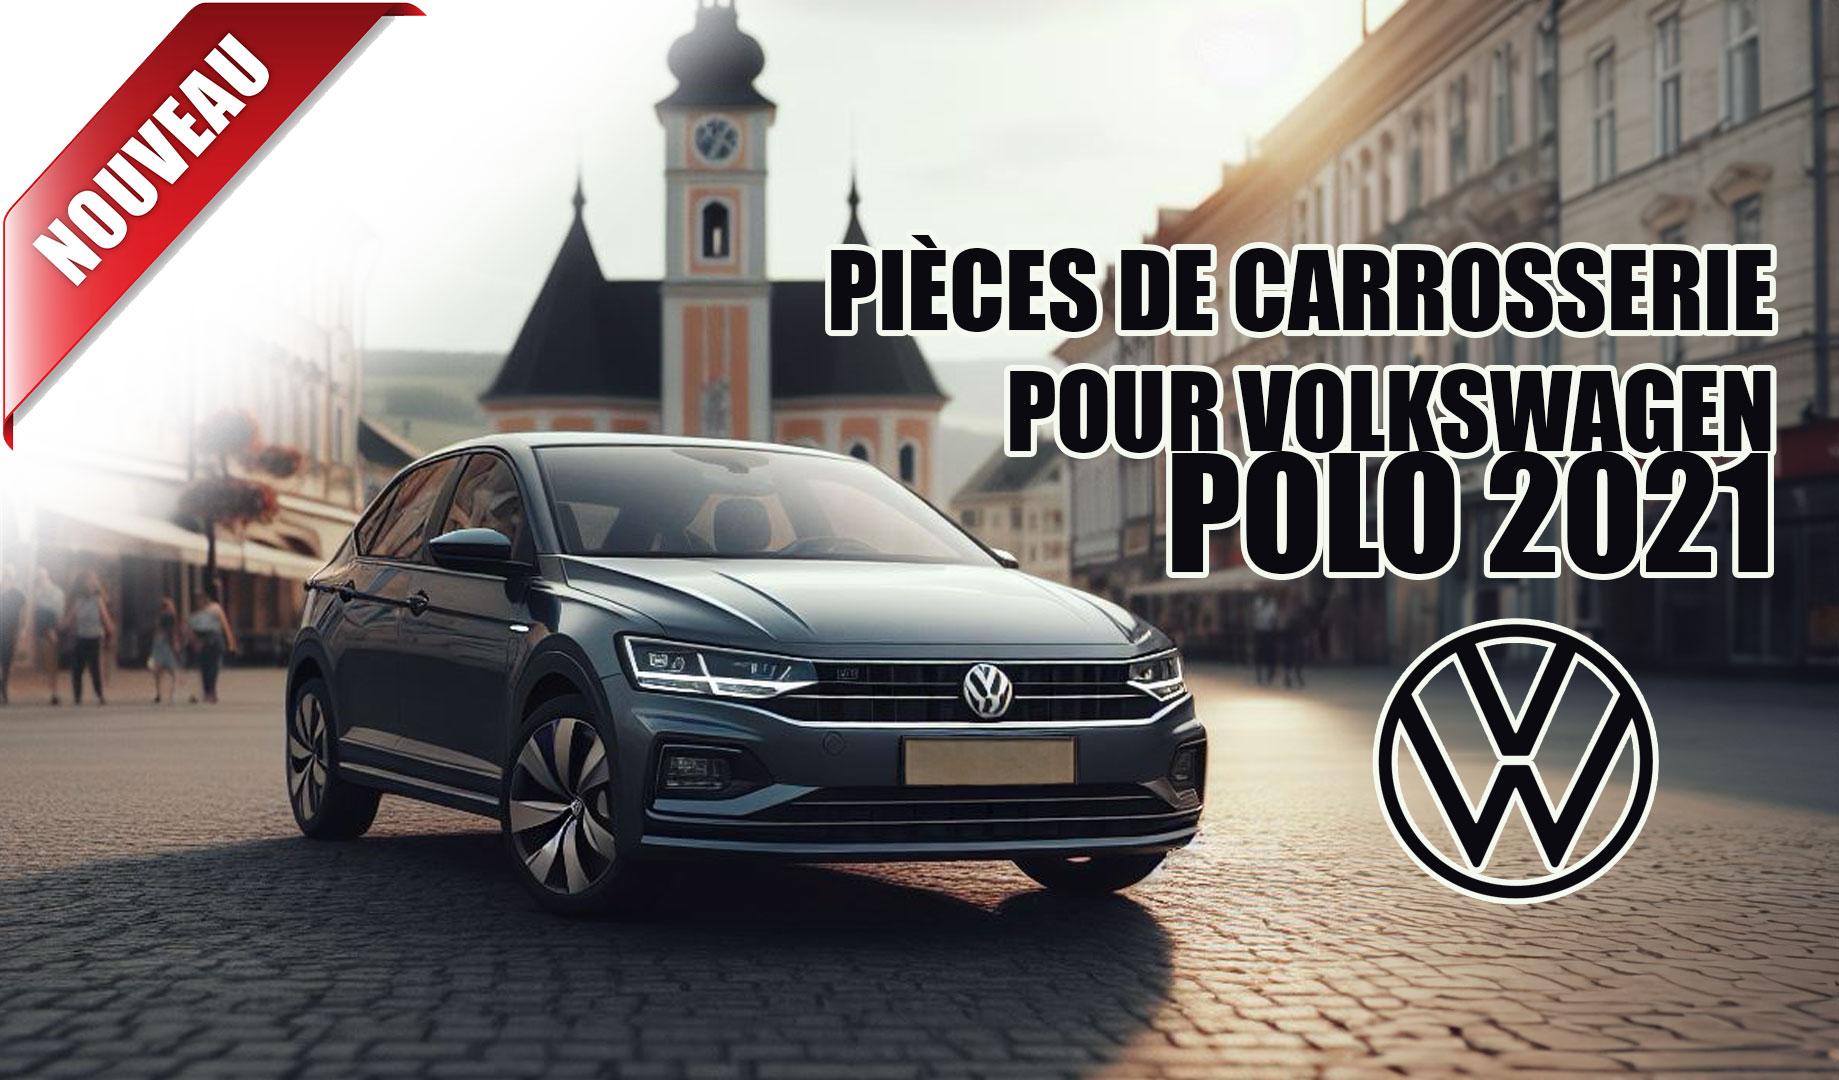 Volkswagen Polo 2021 Pieces Carrosserie